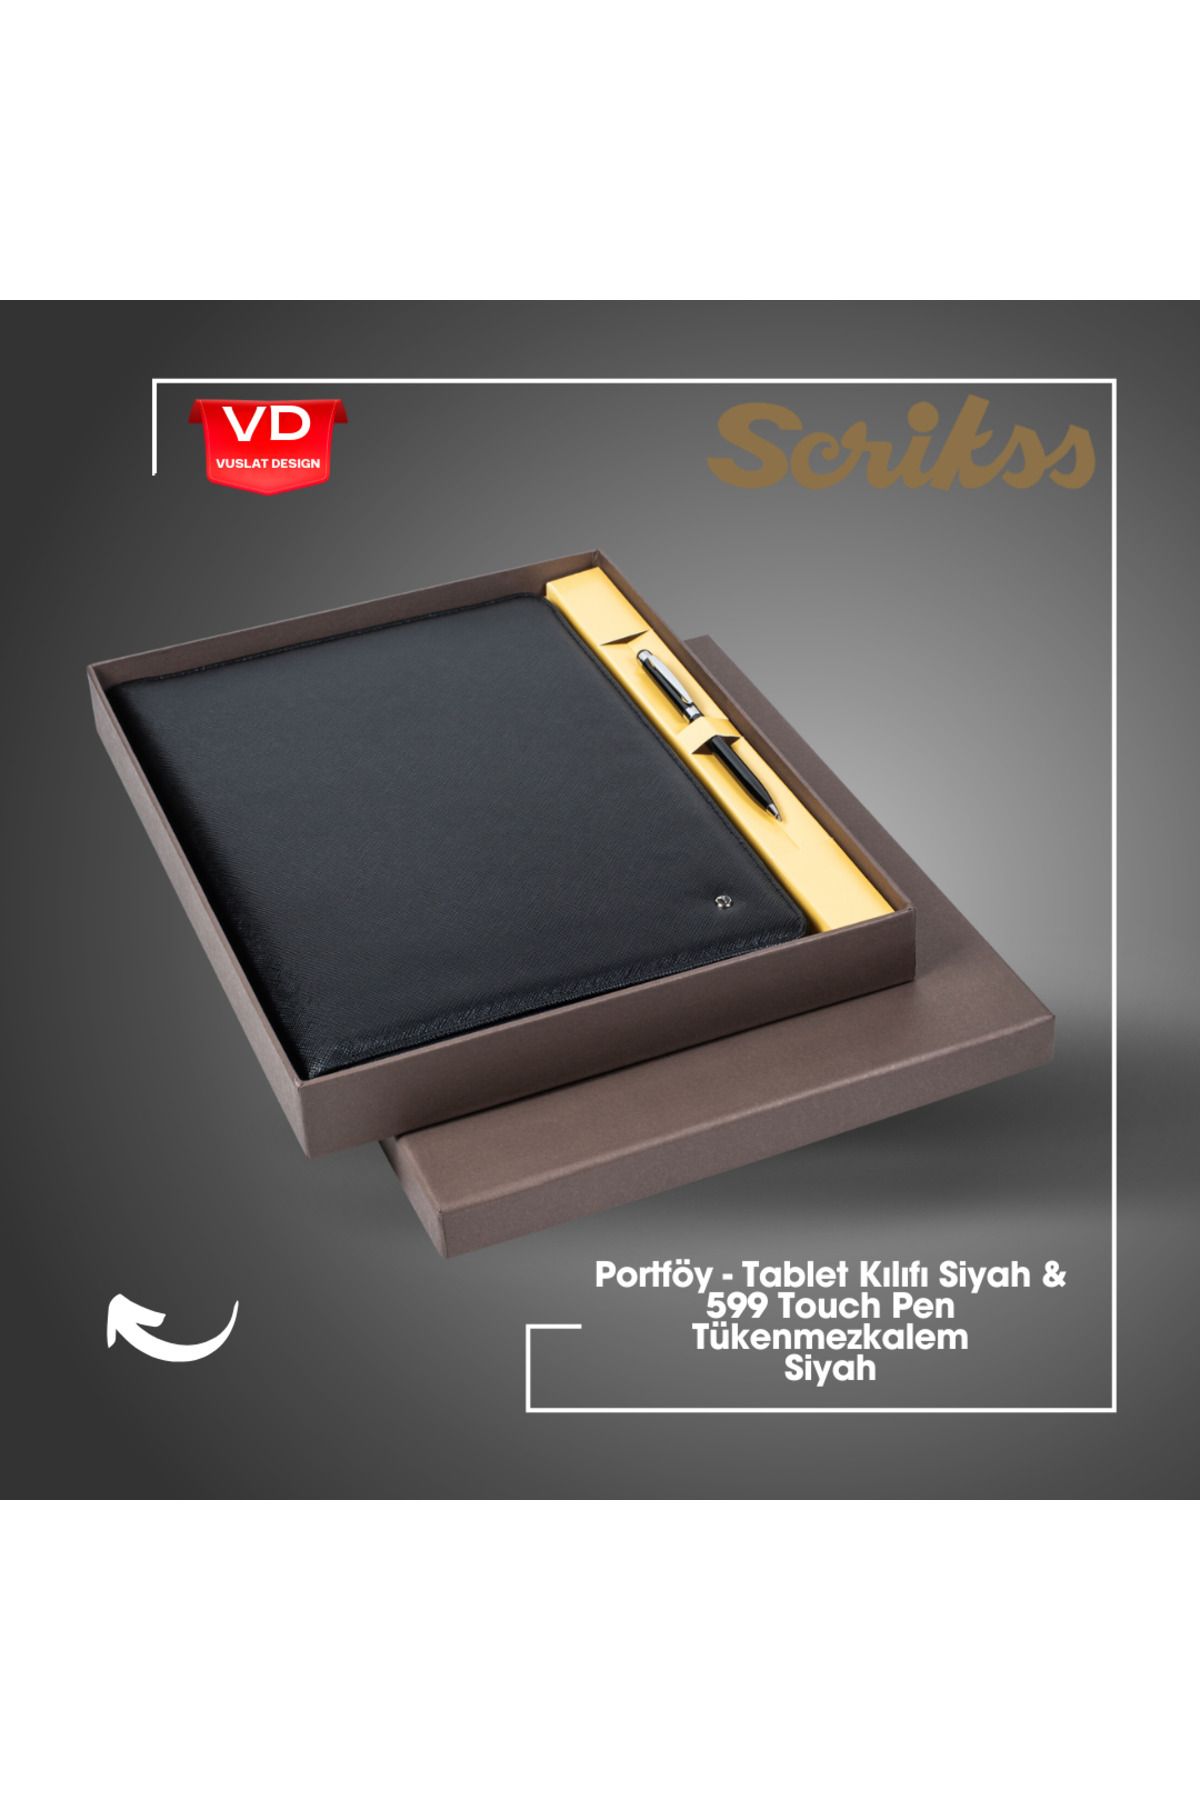 Scrikss Portföy Premium - Tablet Kılıfı Siyah & 599 Touch Pen Tükenmez Kalem Siyah